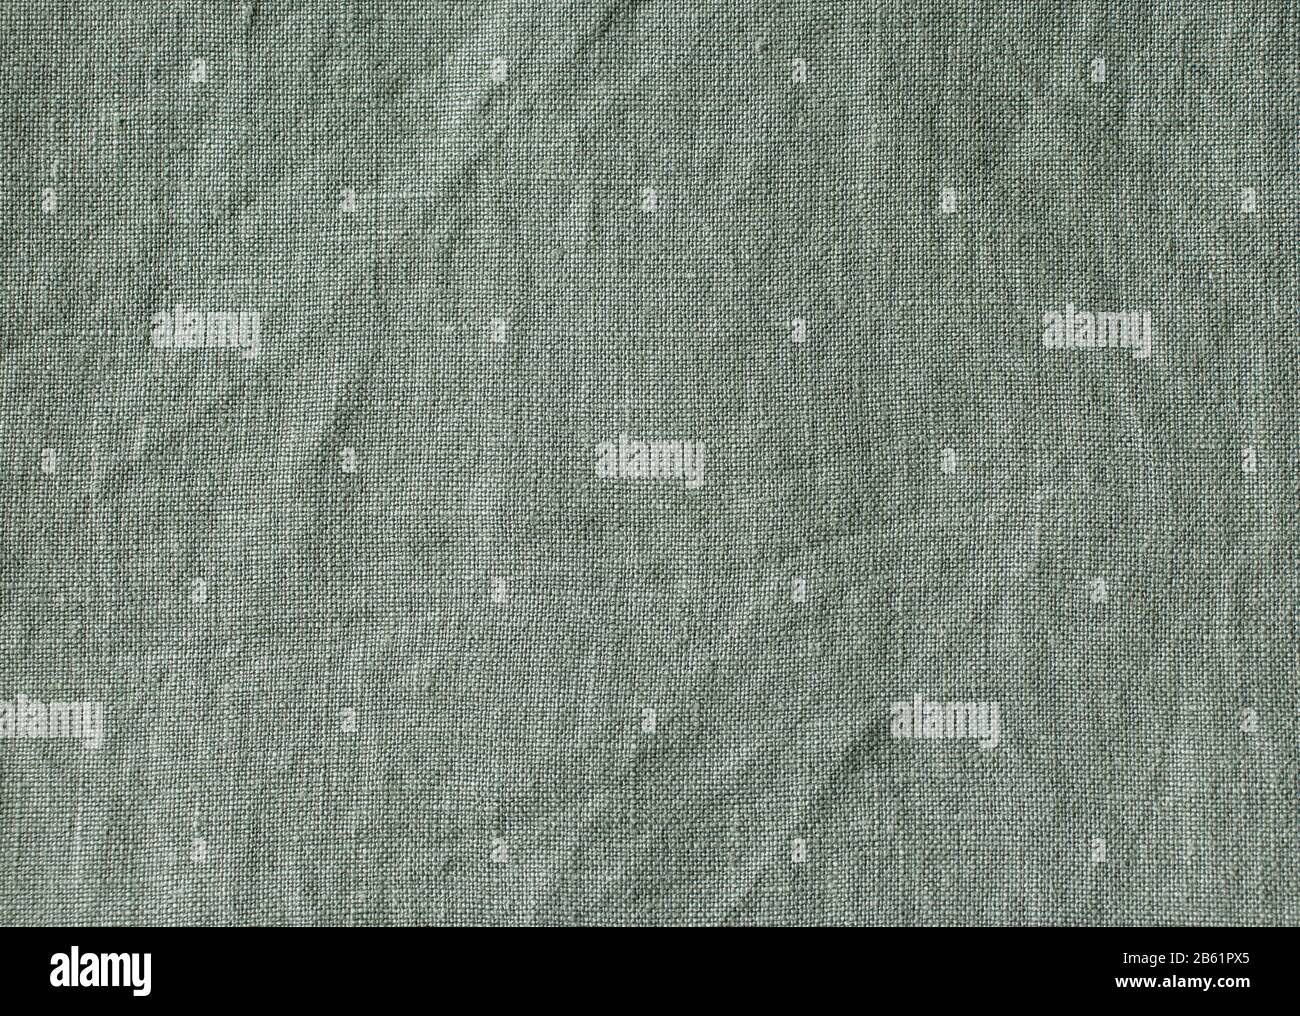 Sage Green Fabric Texture Seamless - Iwish Iwas